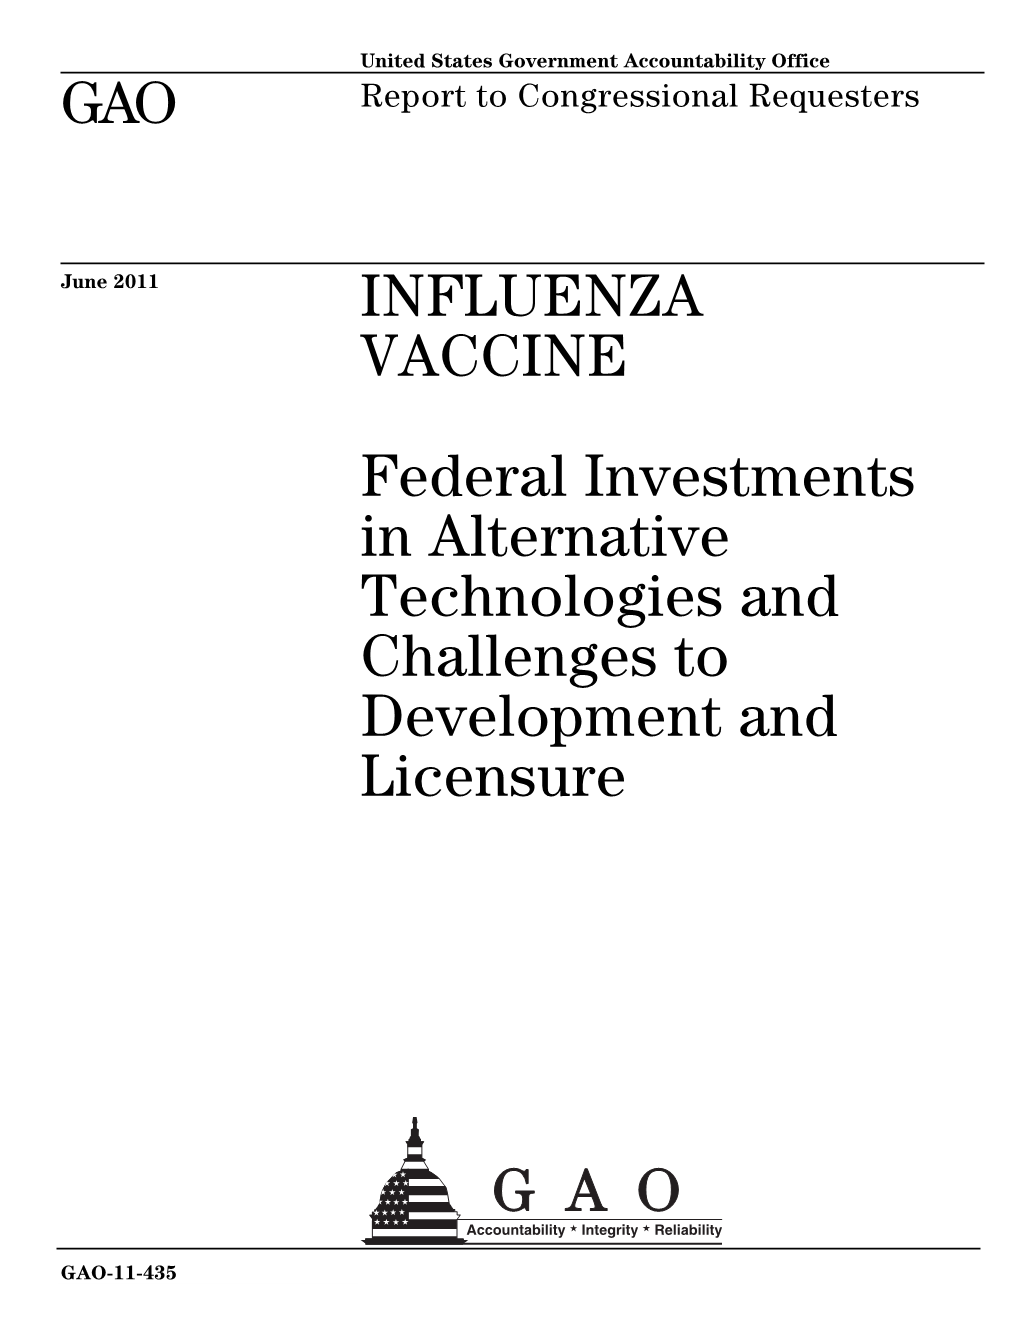 GAO-11-435 Influenza Vaccine Technologies